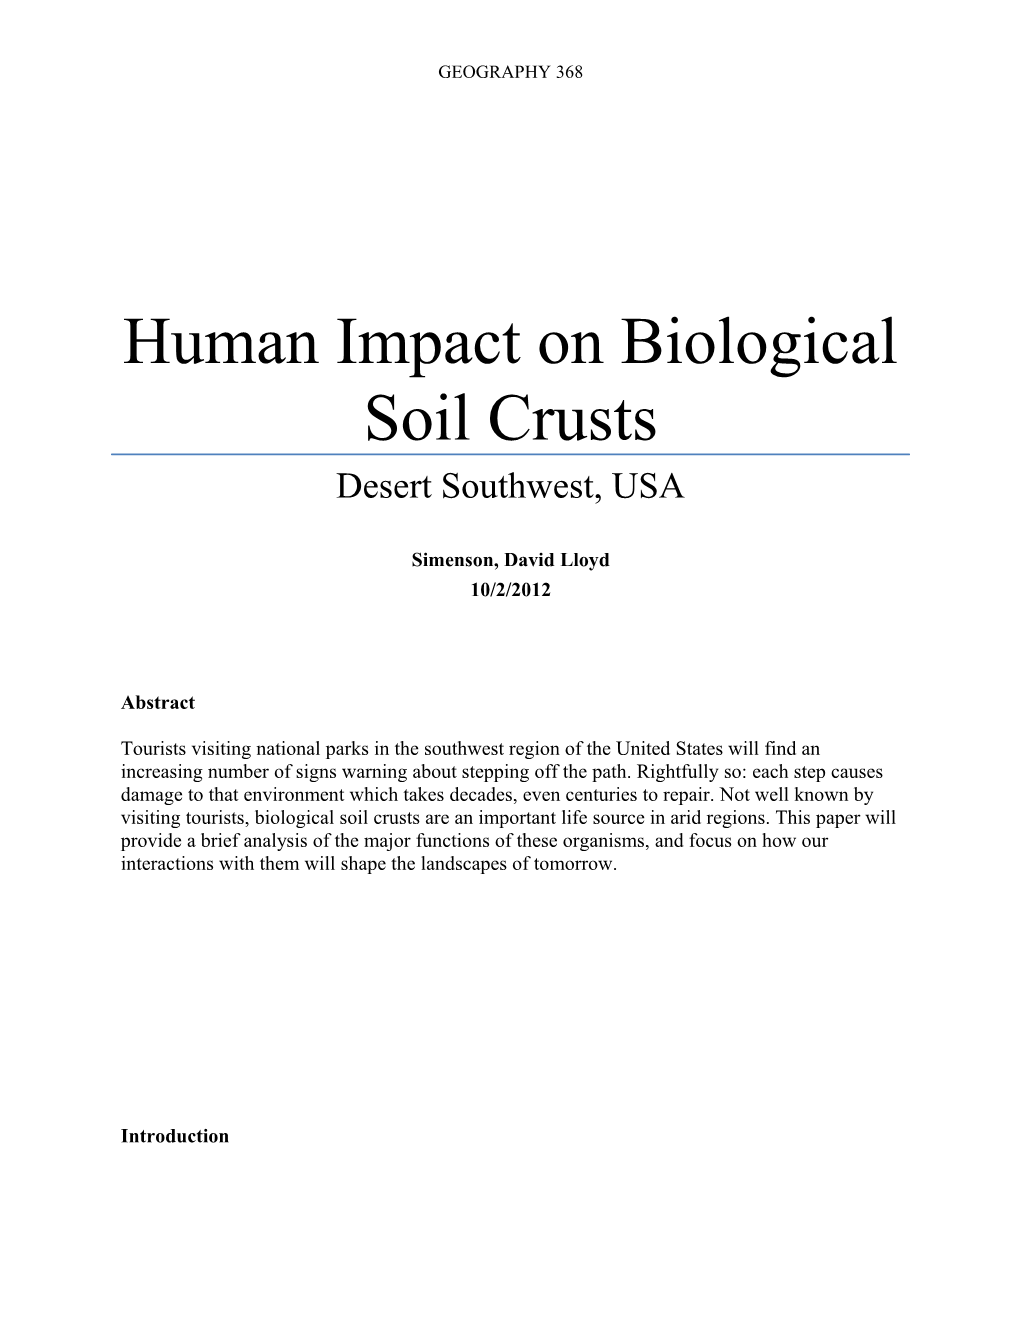 Human Impact on Biological Soil Crusts